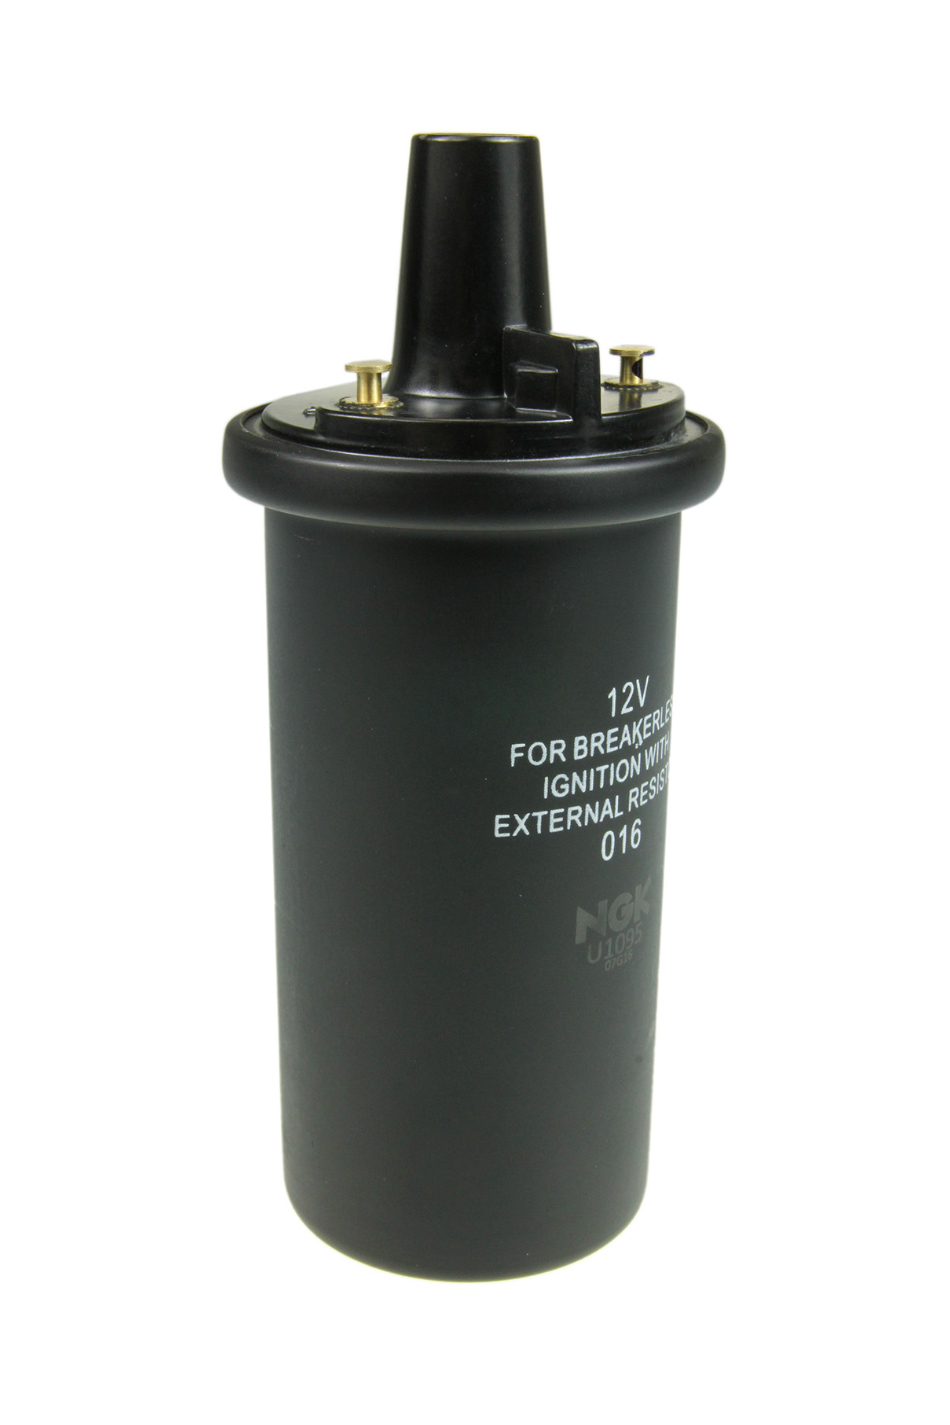 NGK U1095 Ignition Coil, Oil Filled Canister, OE Specs, 2 Male Bullet Terminal, 12 VDC, Standard Ignition, Black, Each